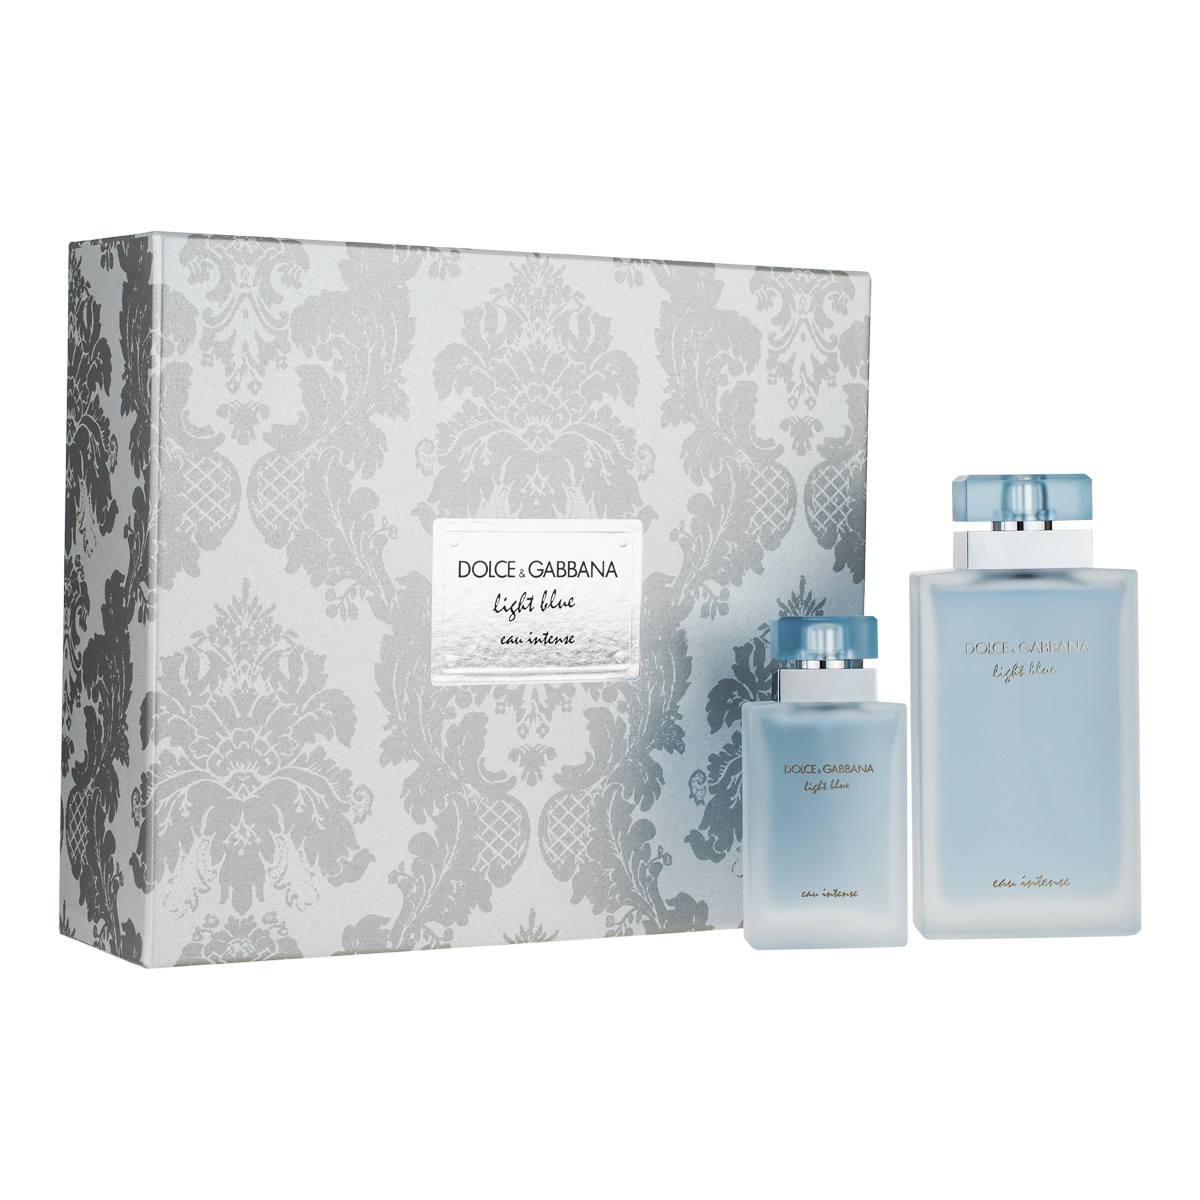 dolce and gabbana intense perfume gift set